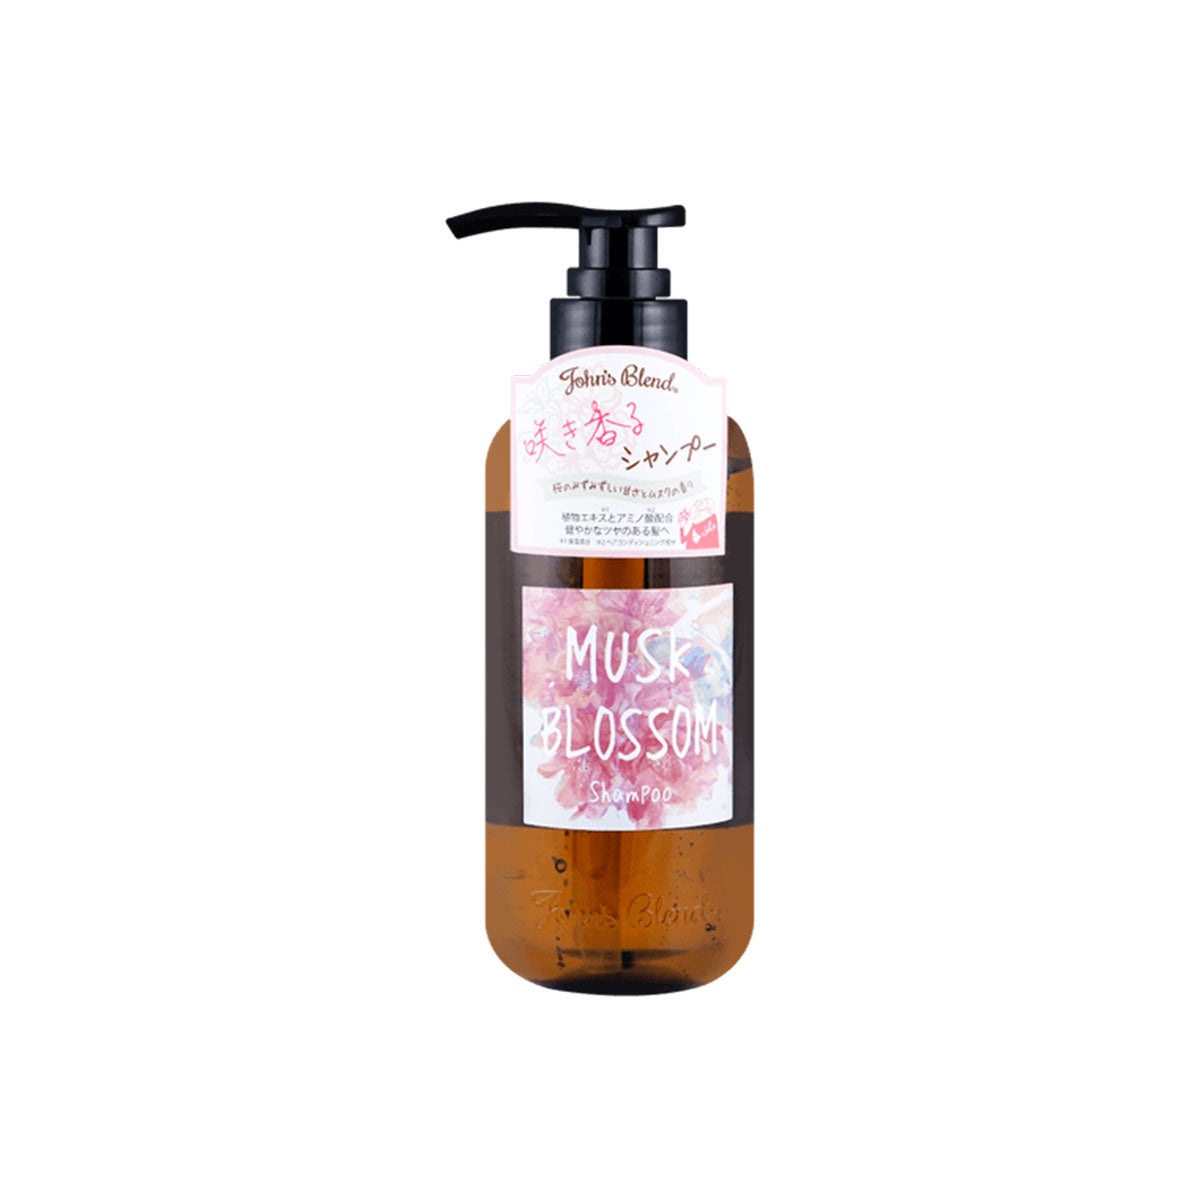 John's Blend Shampoo Limited #Musk Blossom 460ml